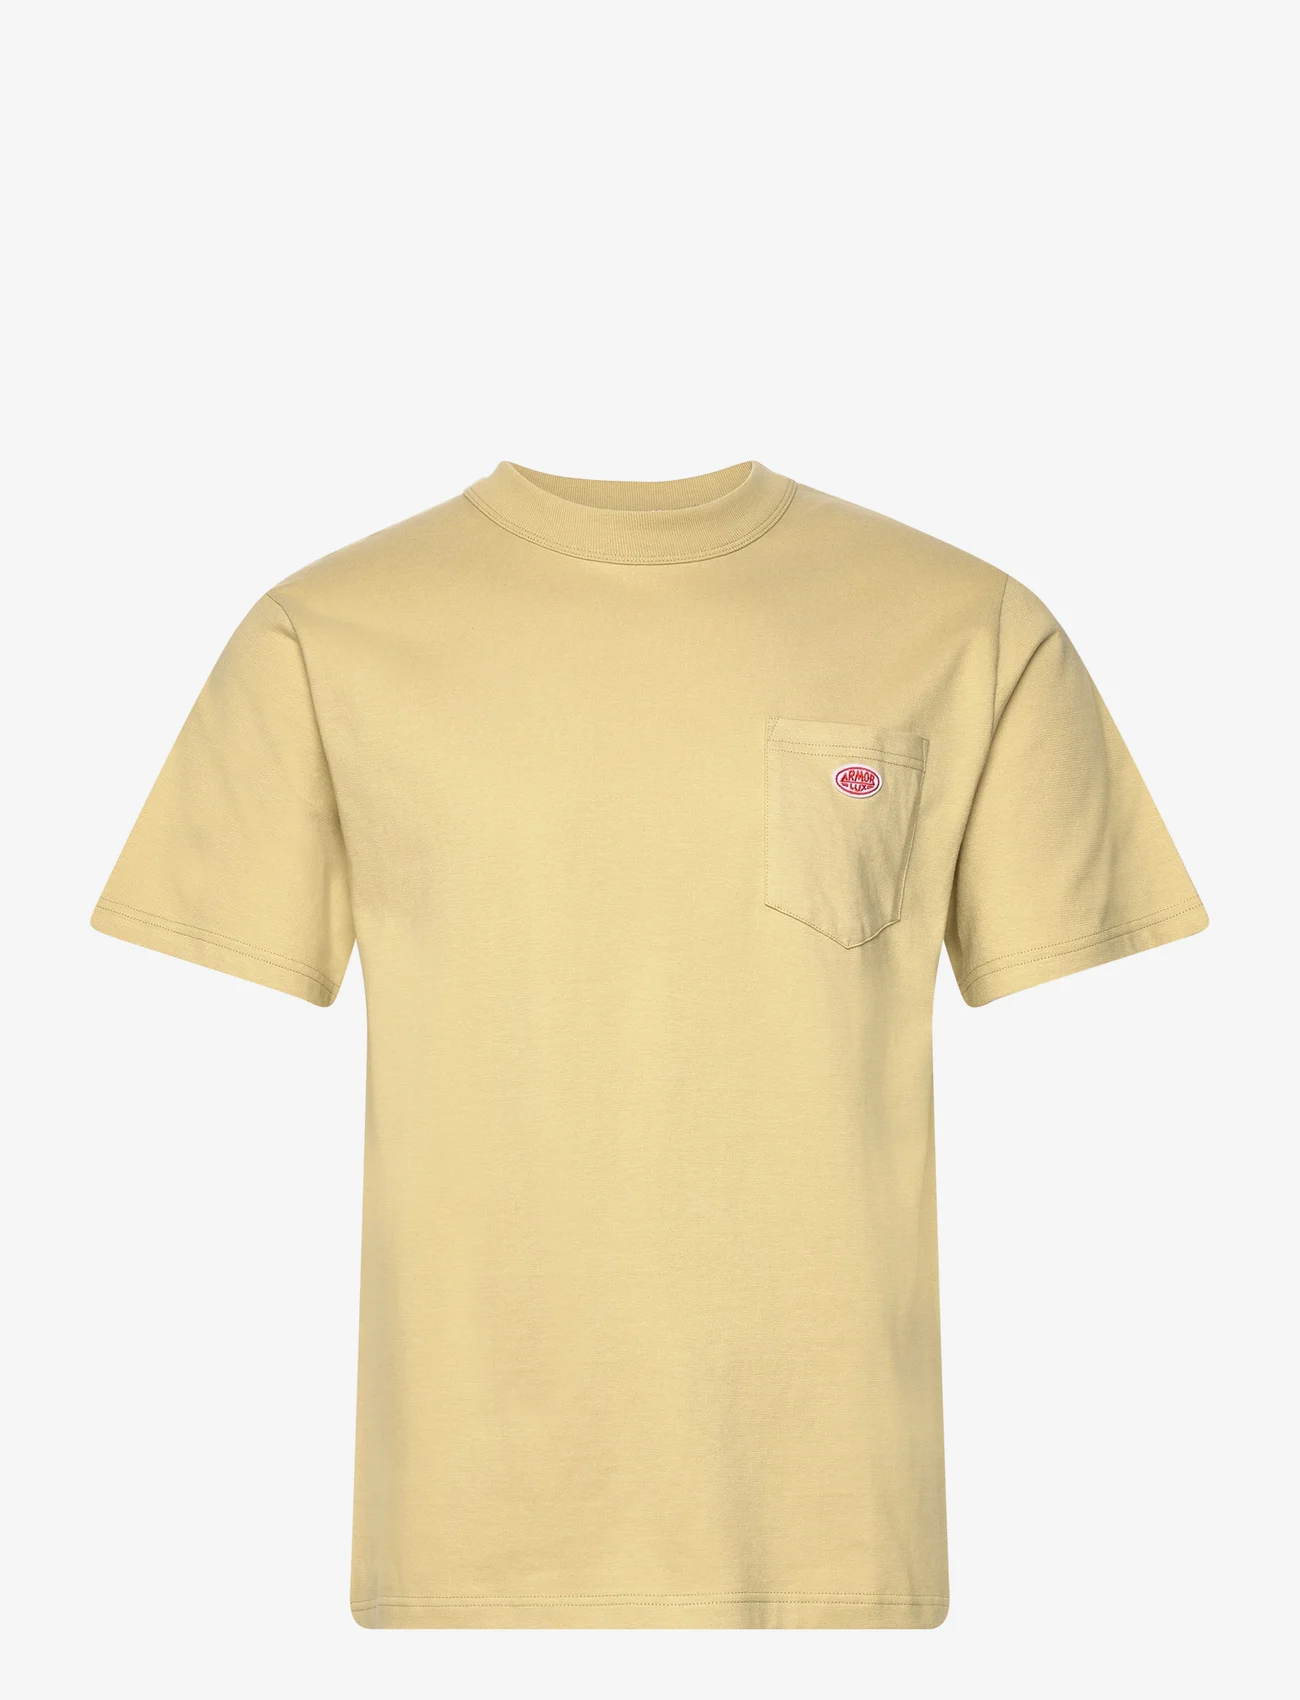 Armor Lux - Basic Pocket T-shirt Héritage - t-shirts - pale olive - 0